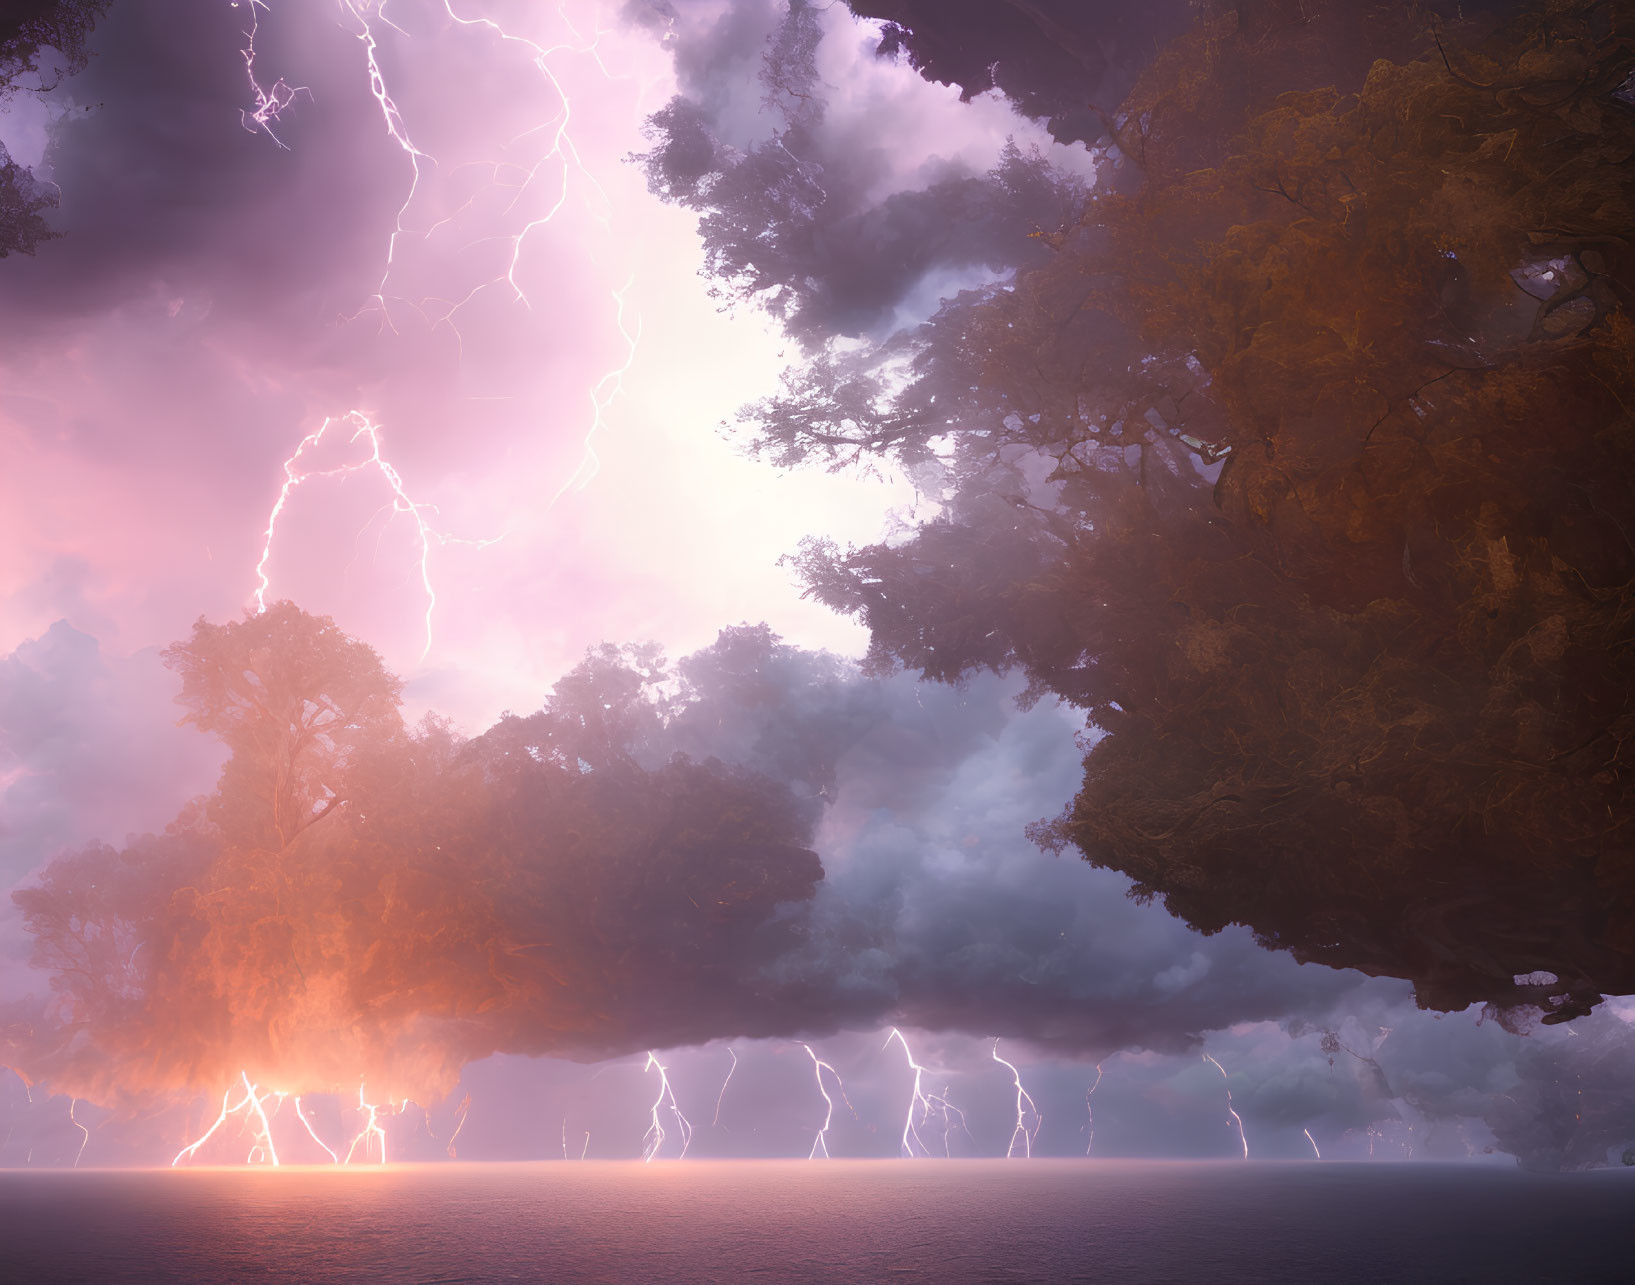 Intense lightning strikes under massive tree in misty pink-purple sky